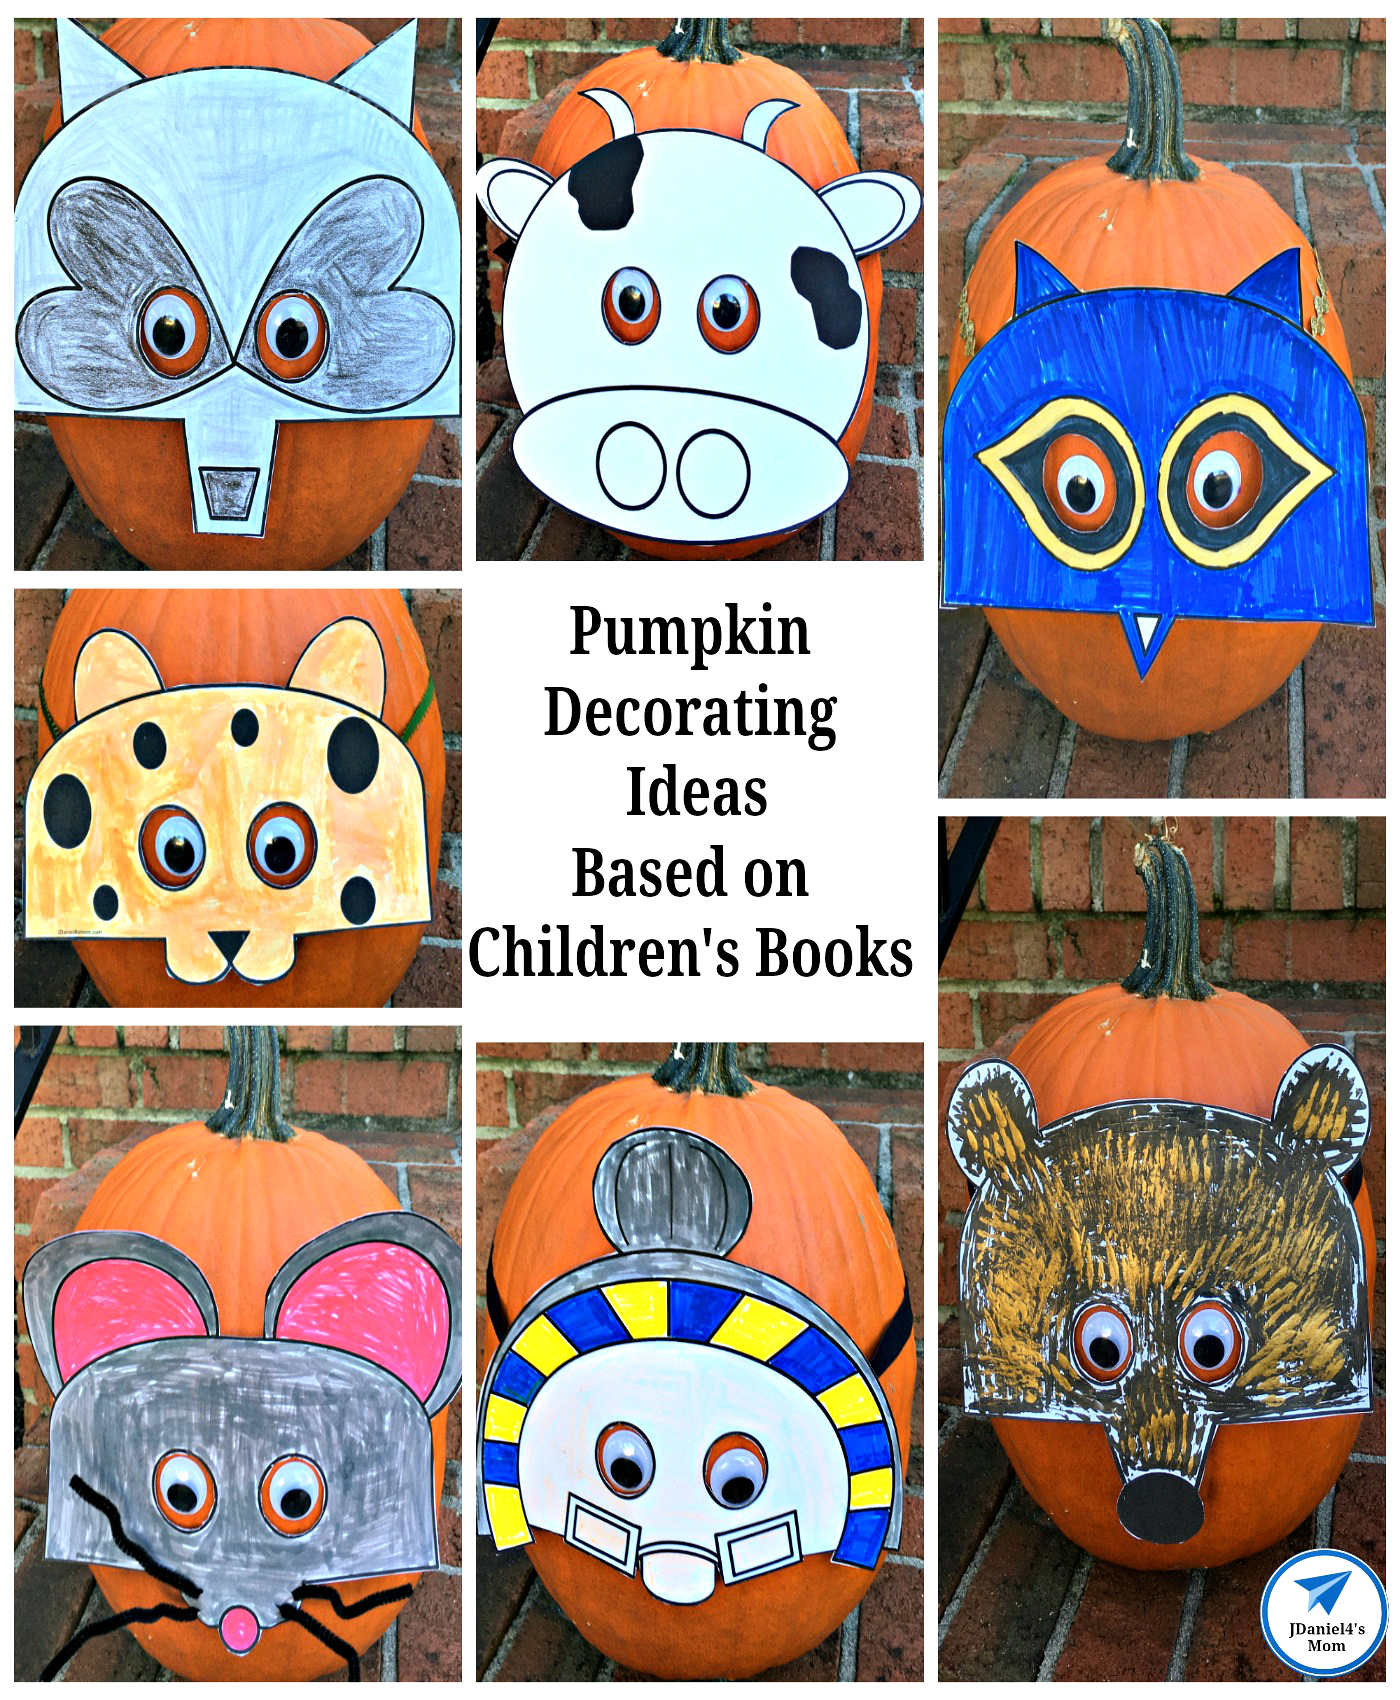 Pumpkin Decorating Ideas Based on Children's Books 